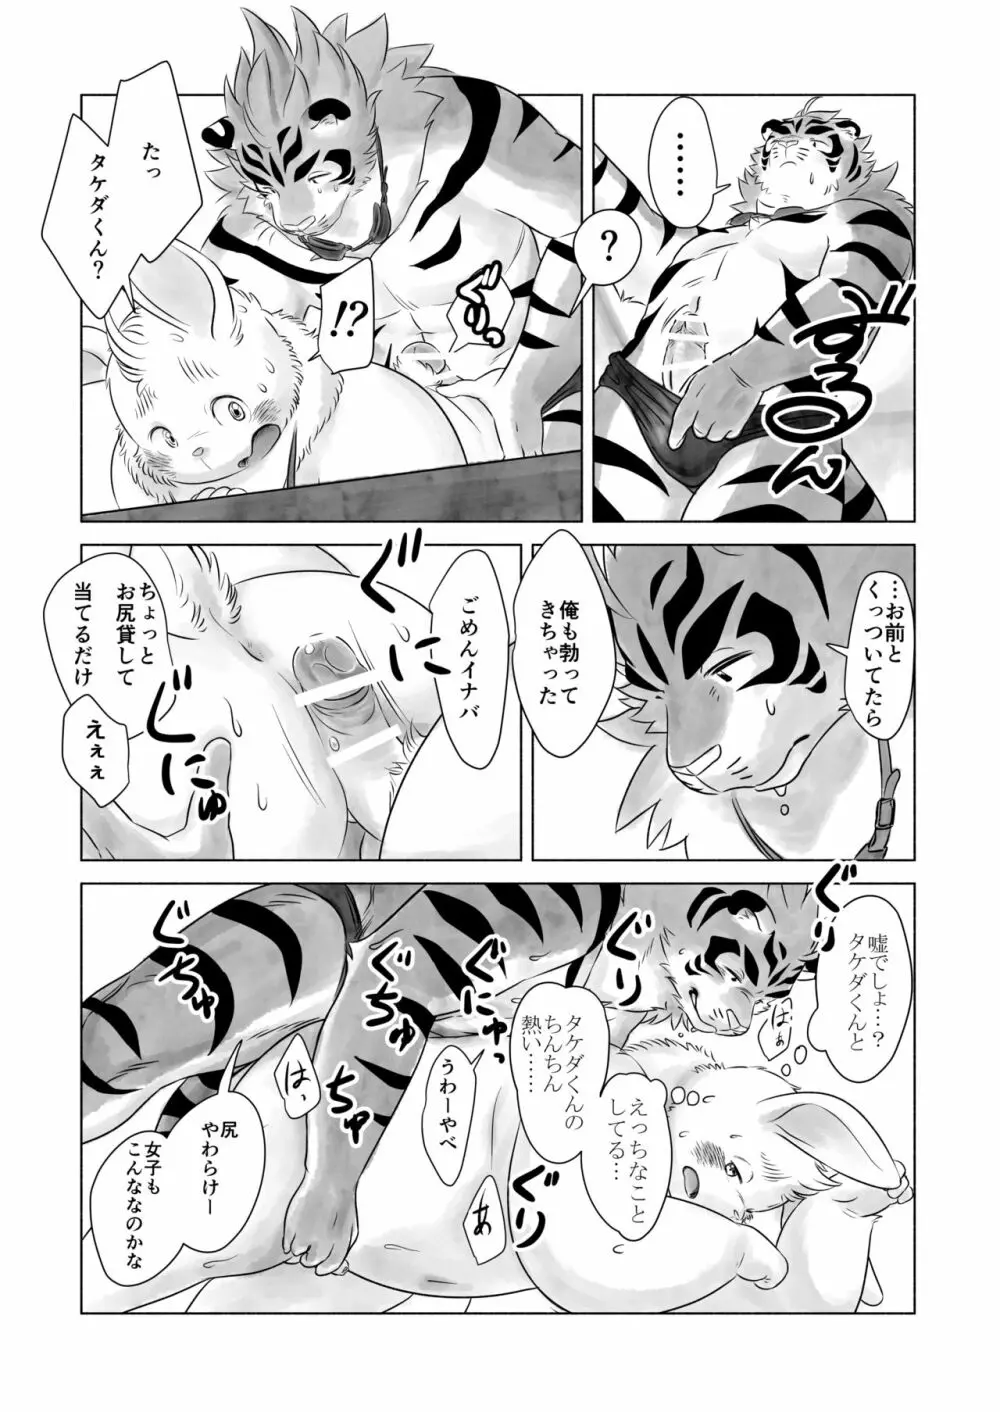 Koda_kota – Bunny and Tiger + extras 7ページ